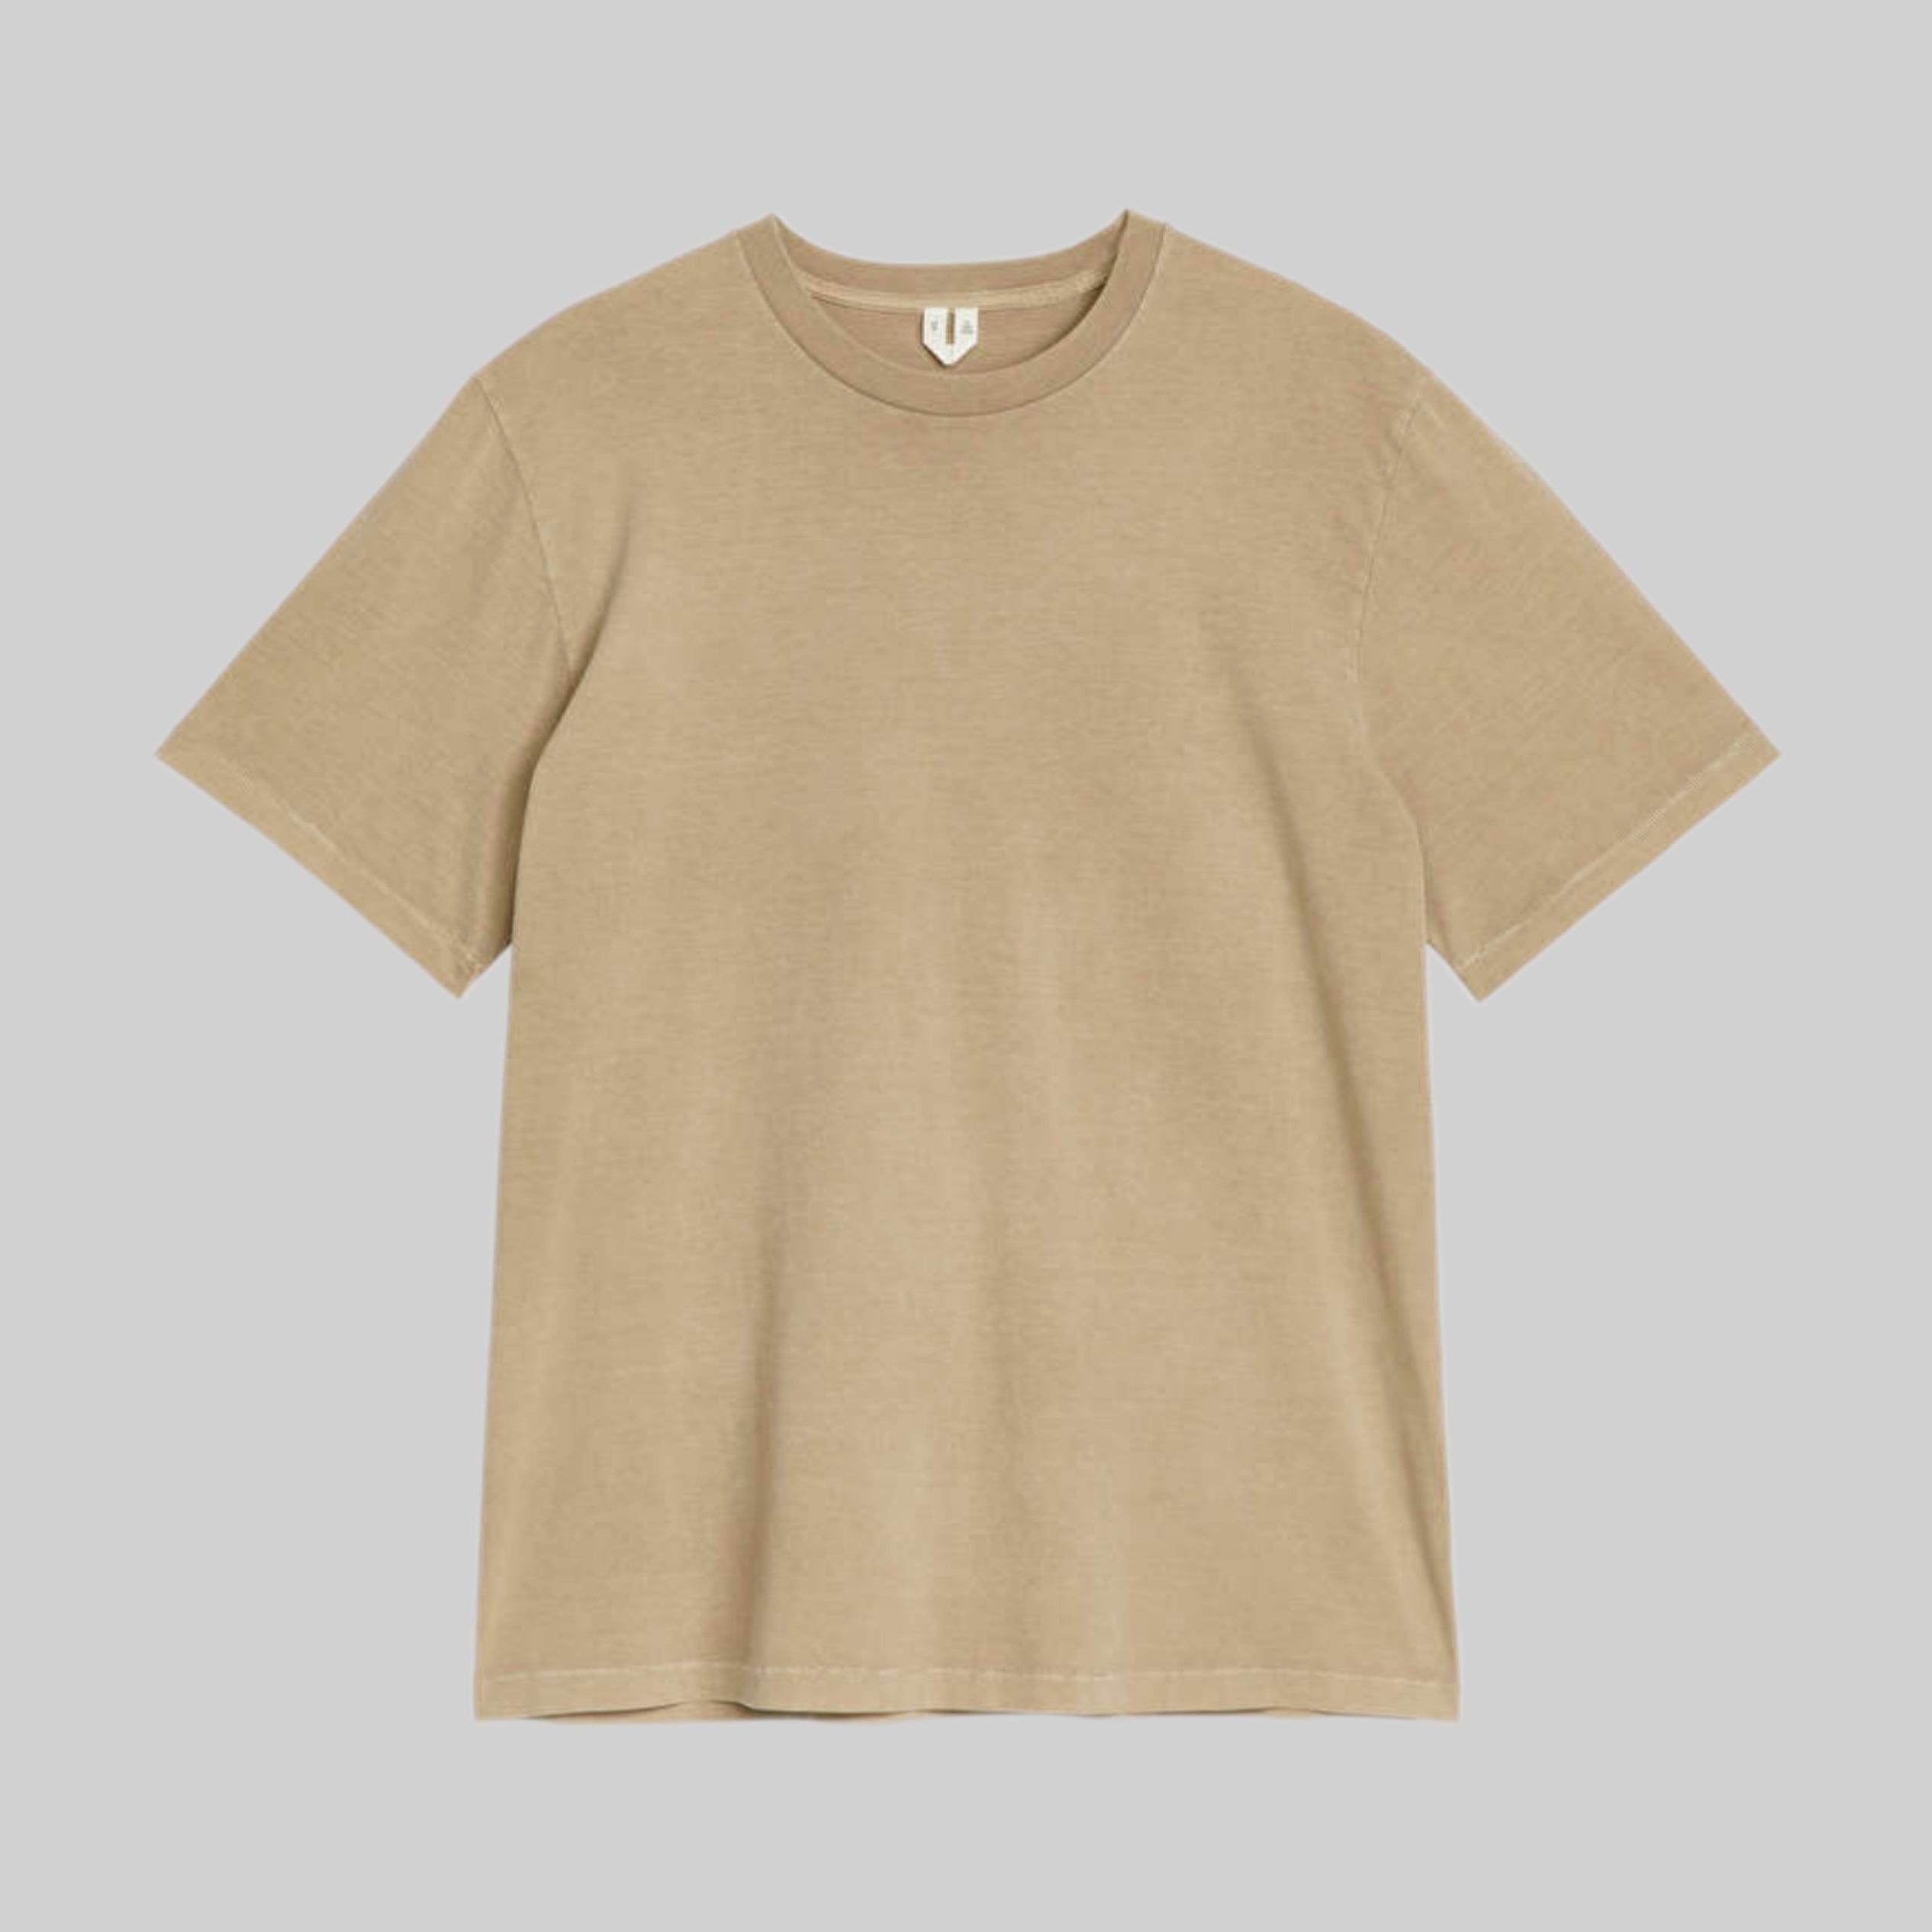 Arket t-shirt, brown, men, frontside